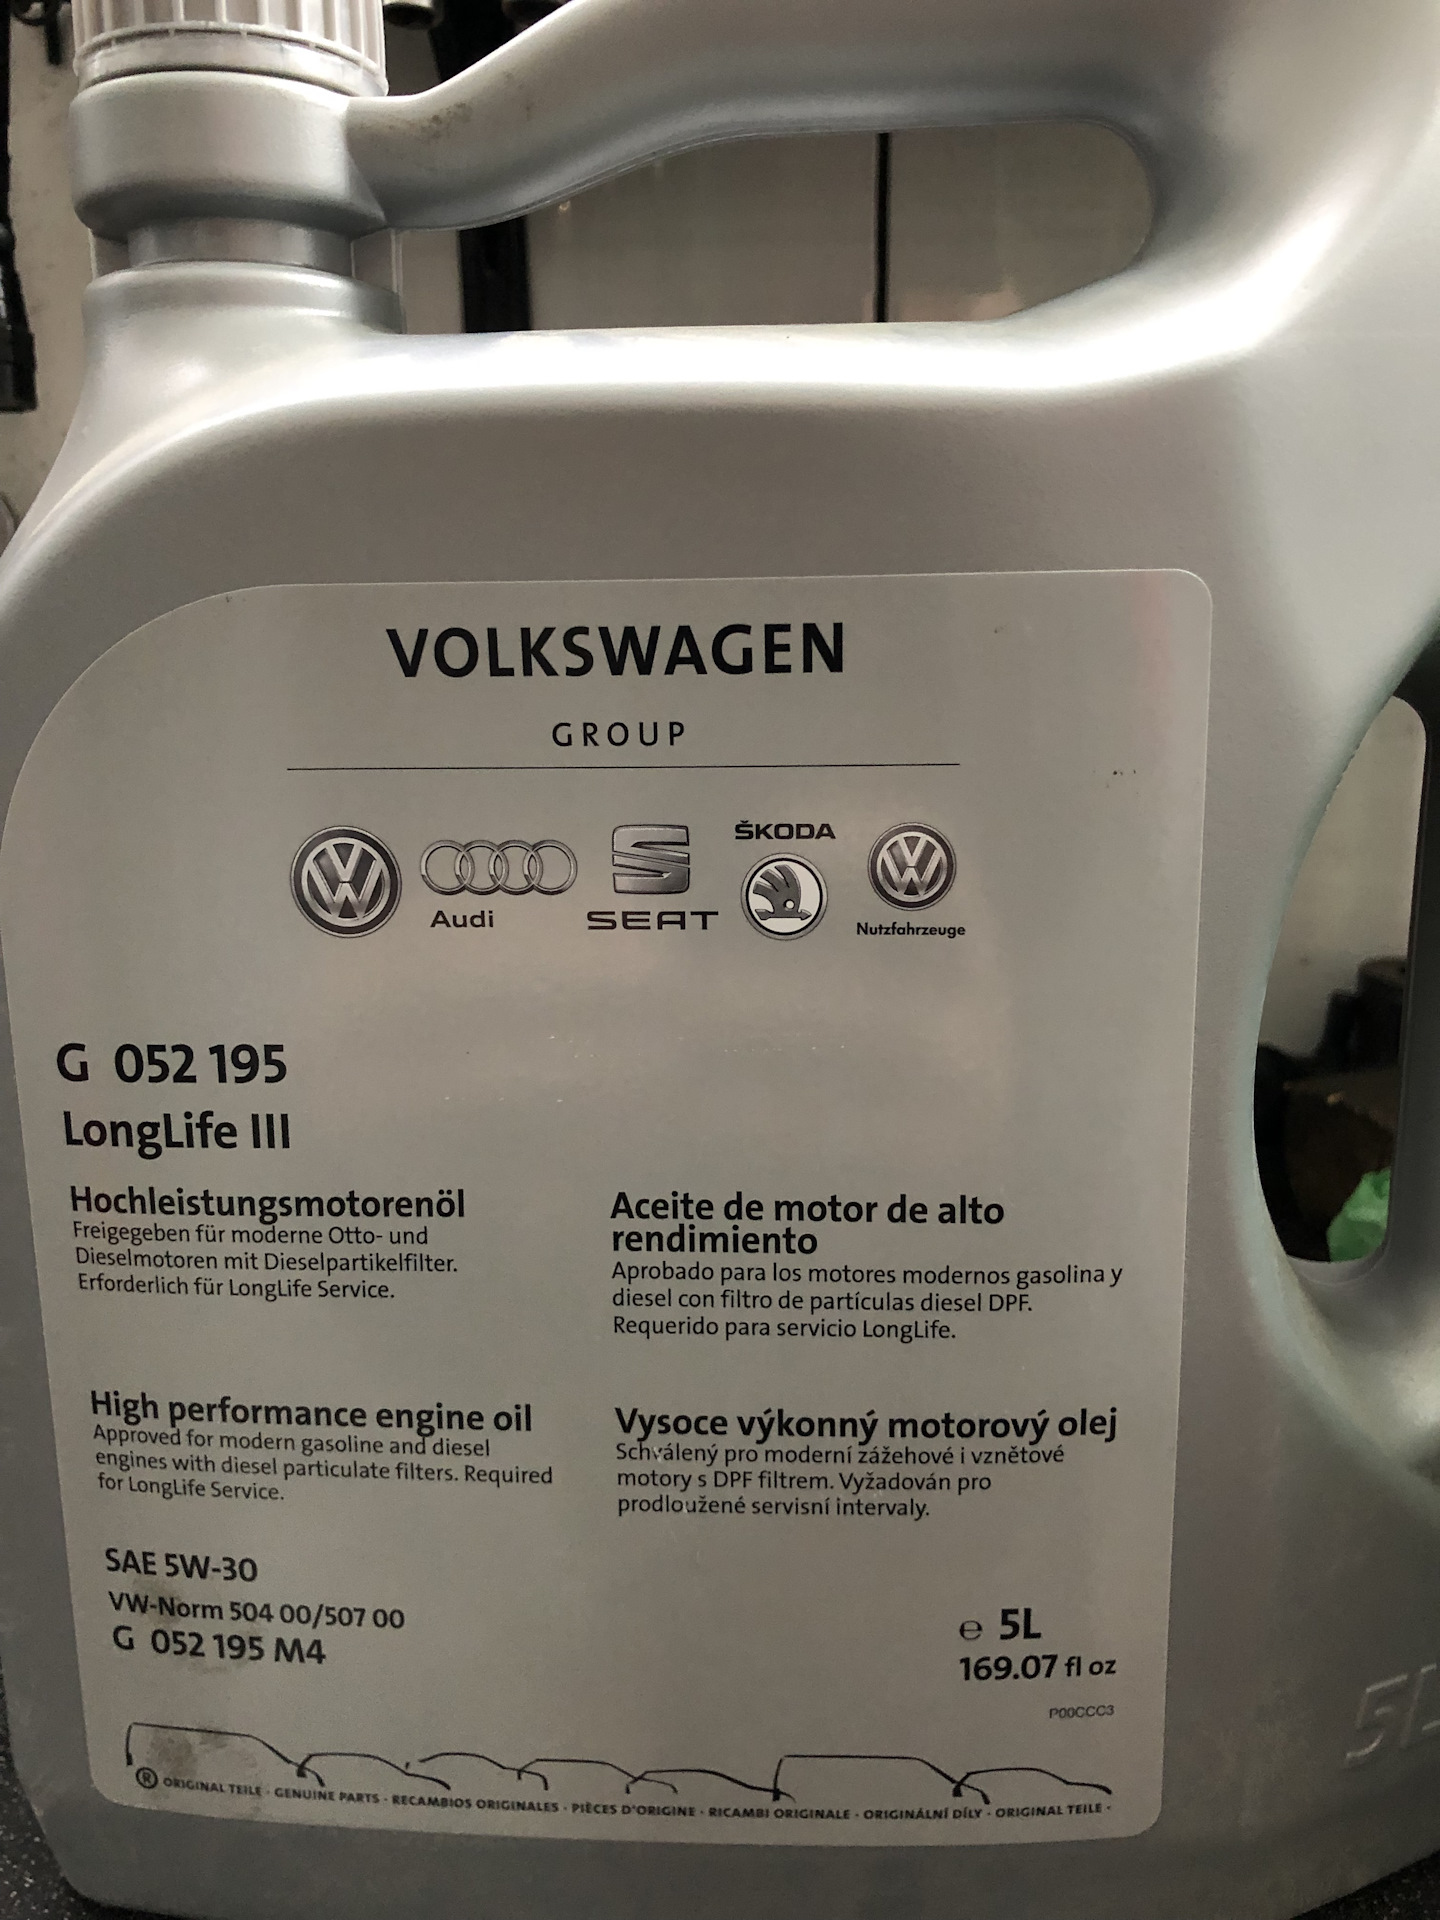 Масло jetta 1.6. Масло в мехатронике Volkswagen Jetta 2010 артикул. Очиститель инжектора VW Jetta 6. G052195m4. Фольксваген Джетта 2014 масло в АКПП.